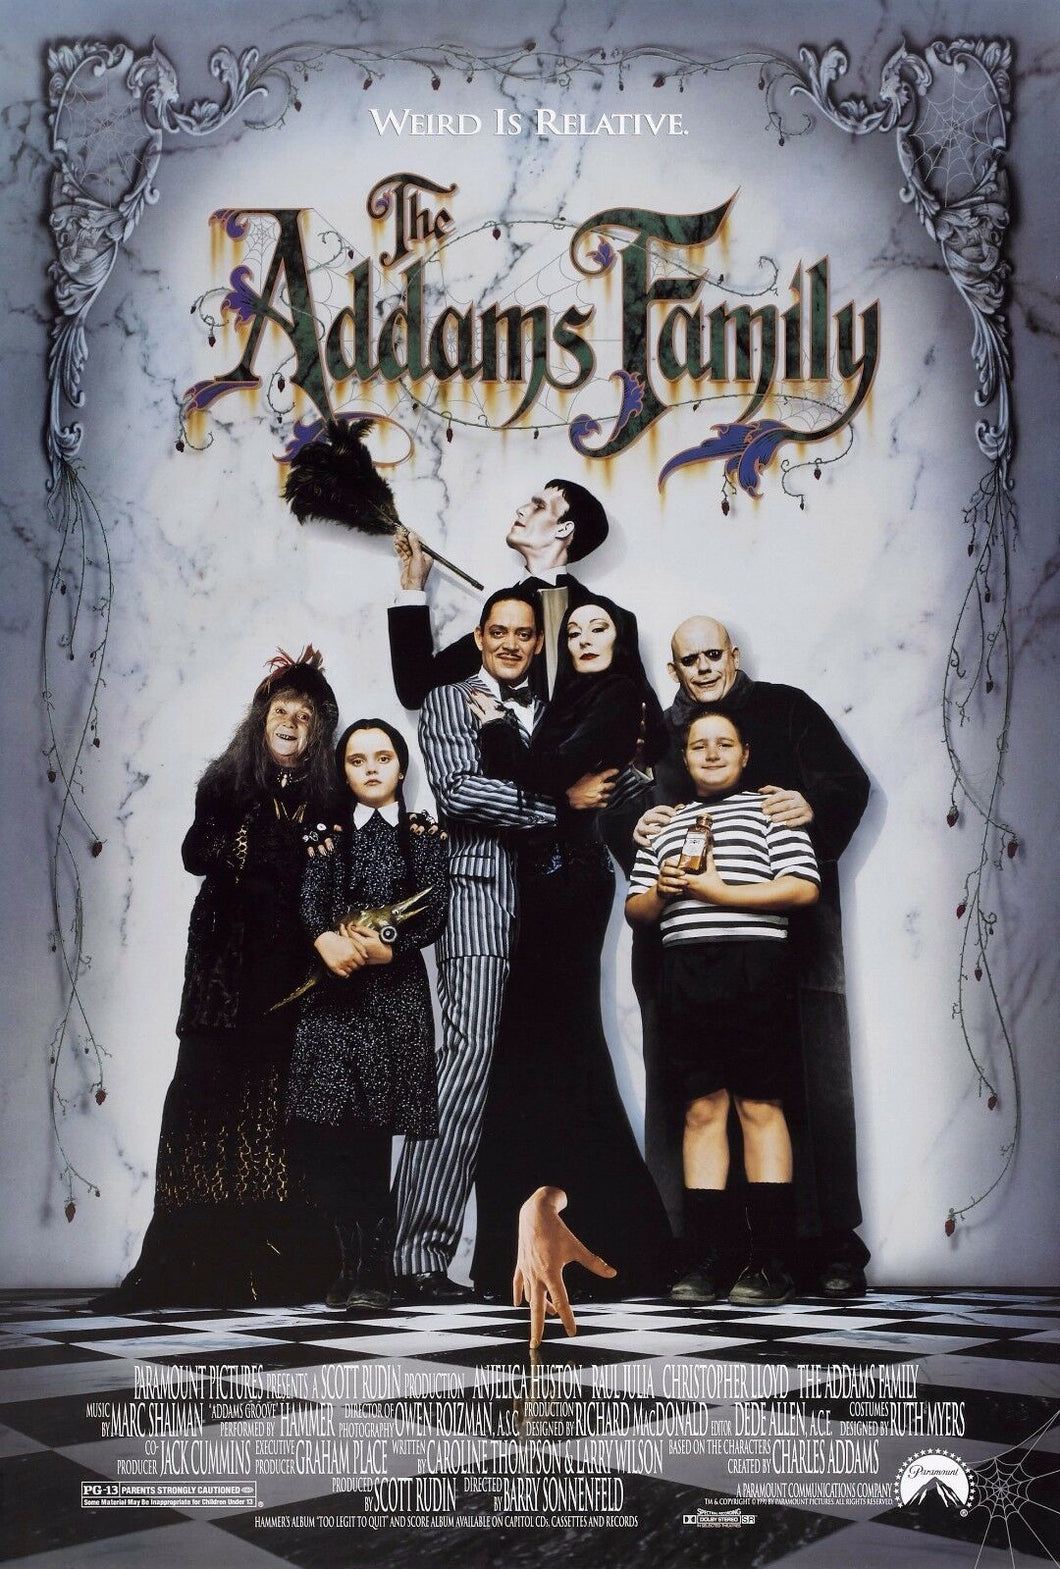 Anjelica Huston - Signed Addams Family Image #6 (8x10, 11x17)